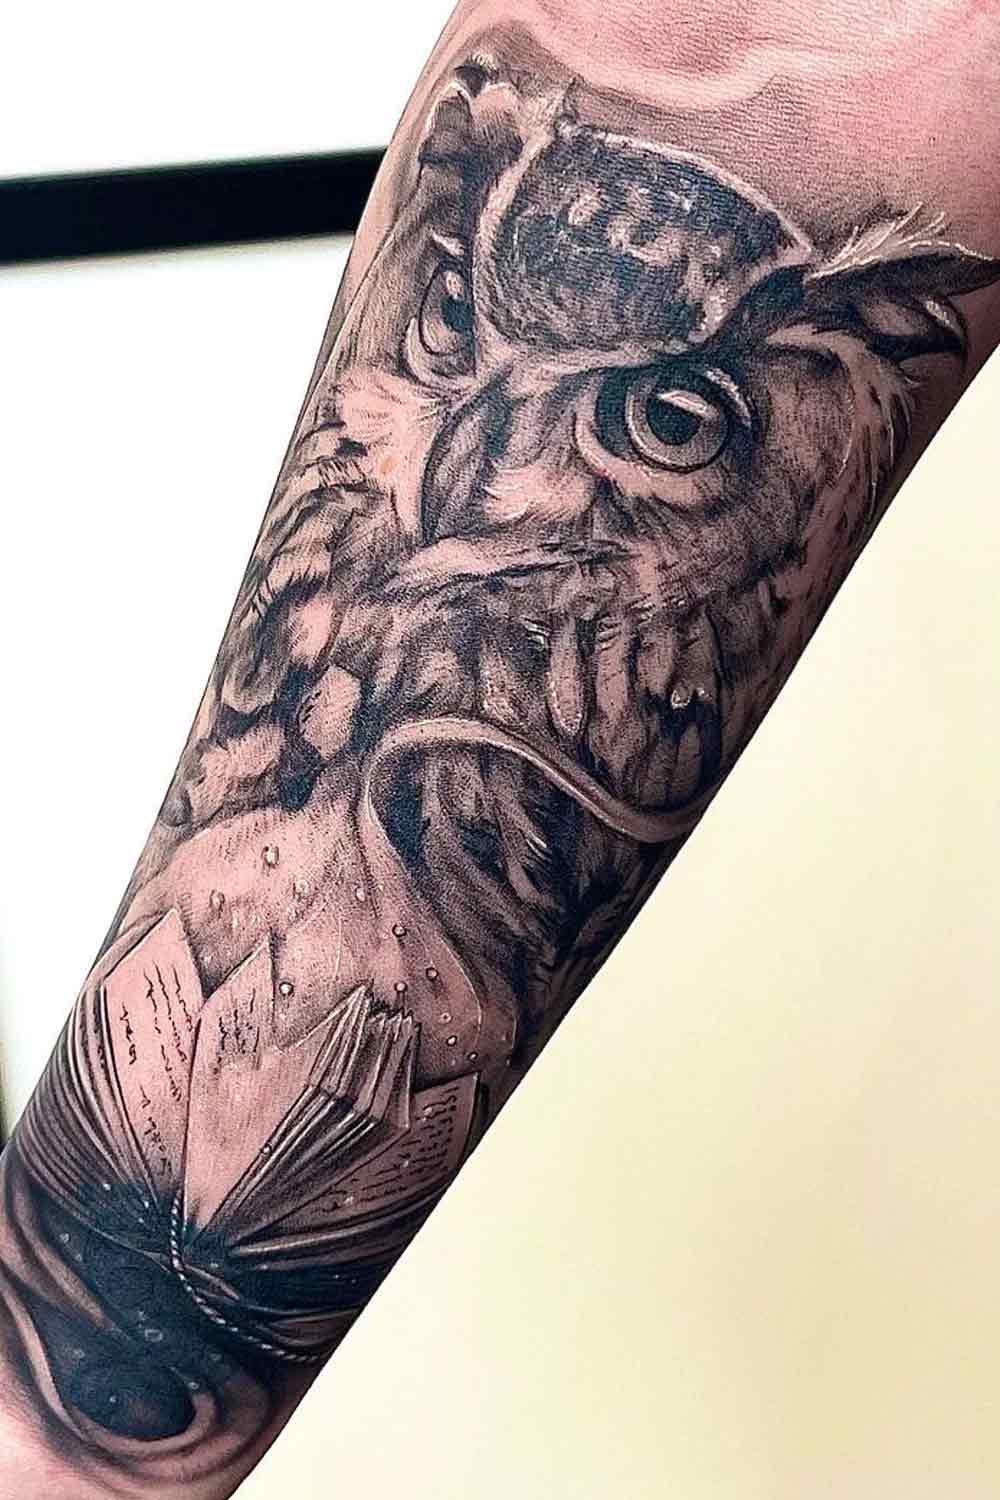 Clock on Chain Owl Tattoo on Forearm Tattoo - Best Tattoo Ideas Gallery